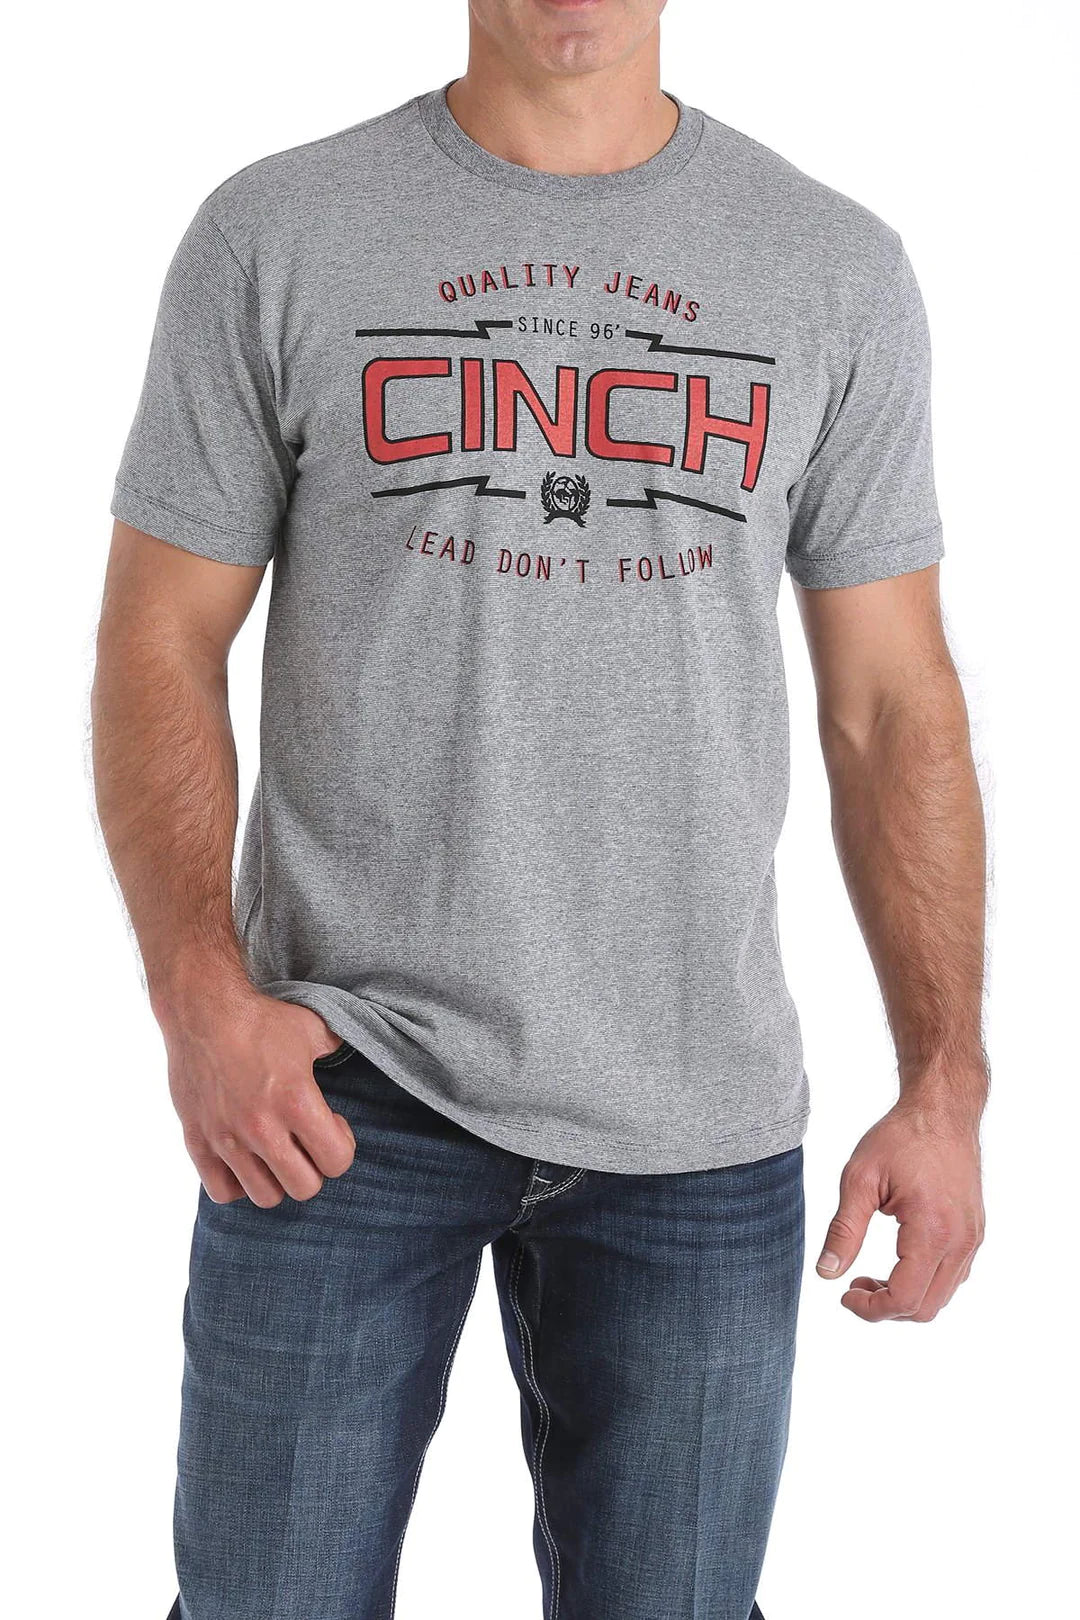 CINCH - Mens T-Shirt